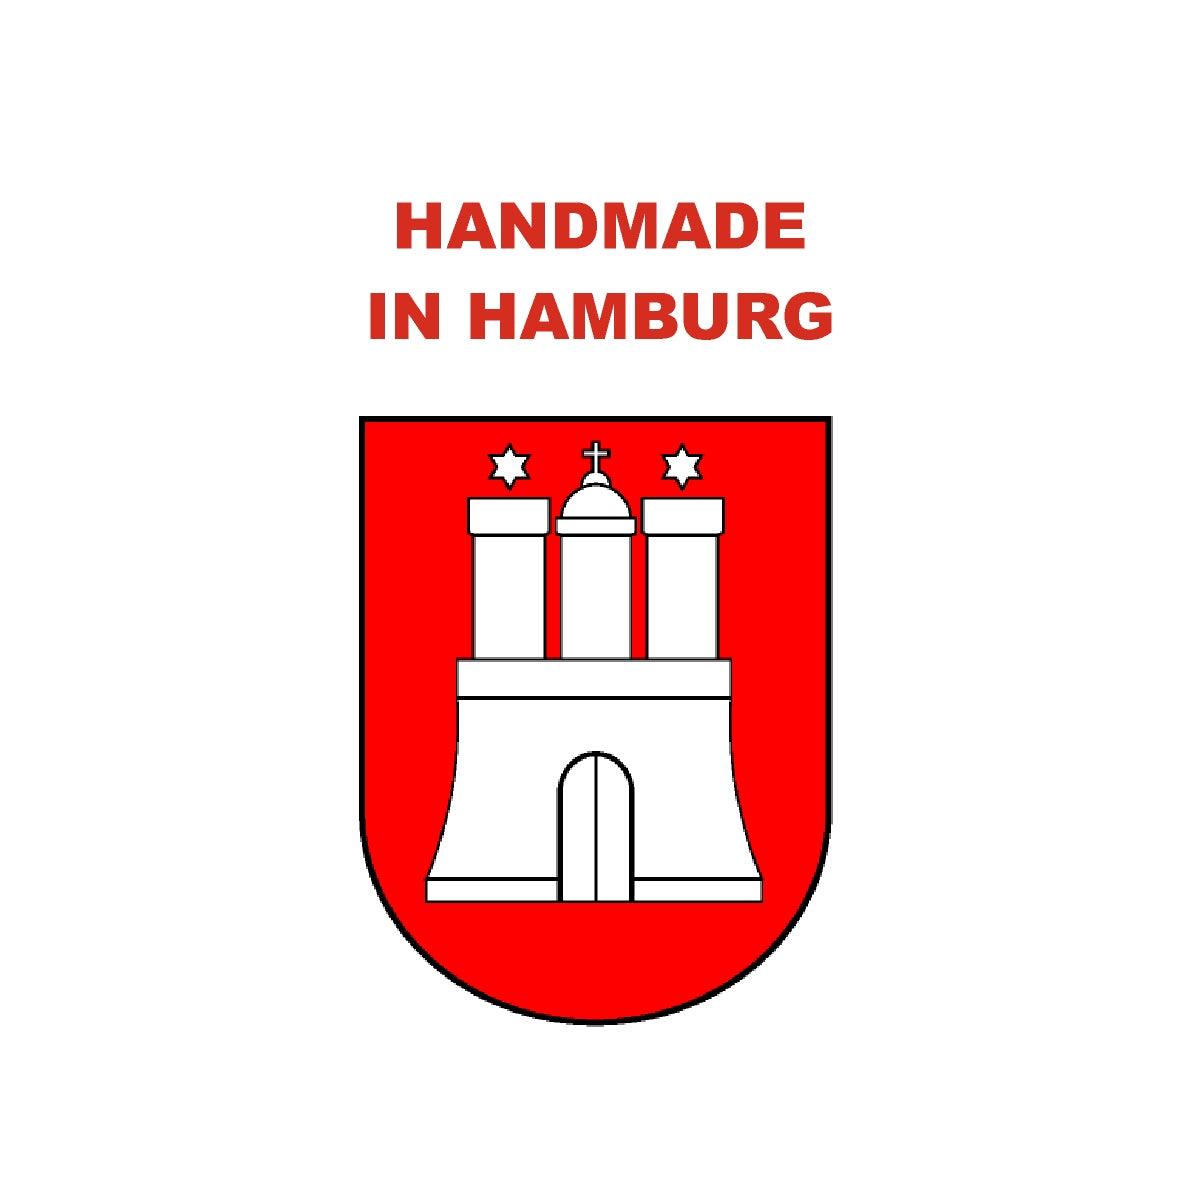 Accessoires-handgefertigt-in-Hamburg-handmade-wavepirate-shop